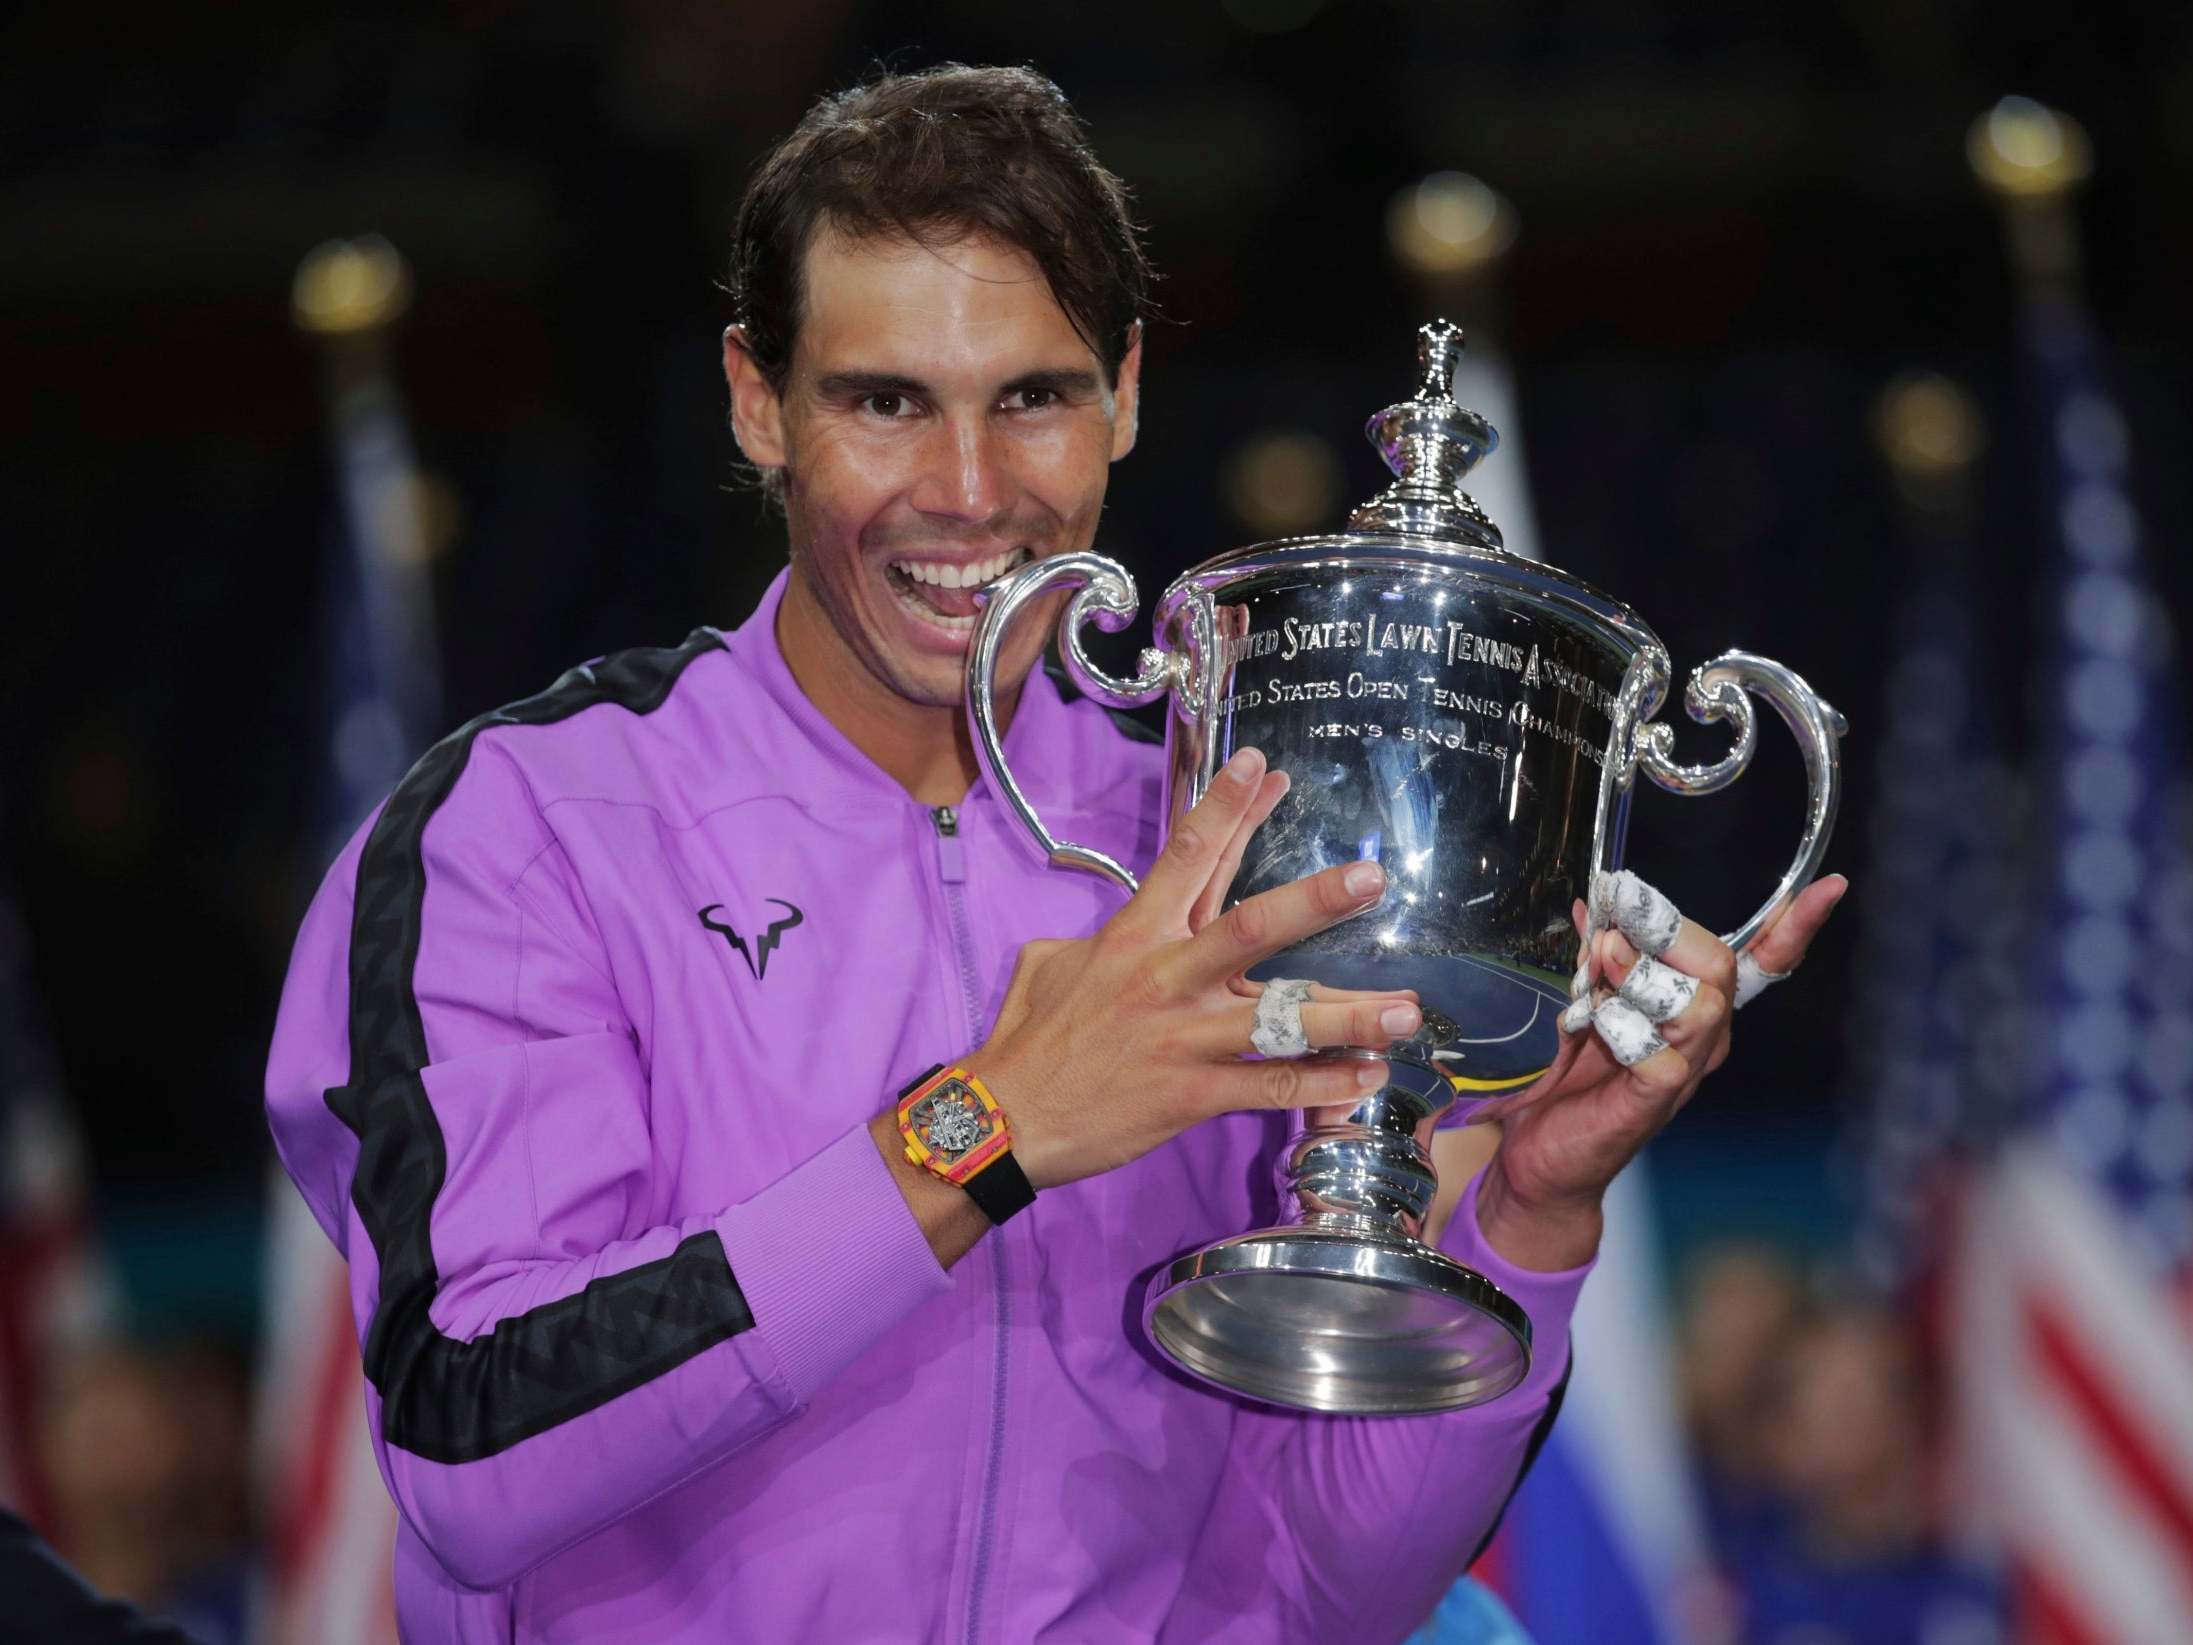 Rafael Nadal won the US Open men's singles title last year